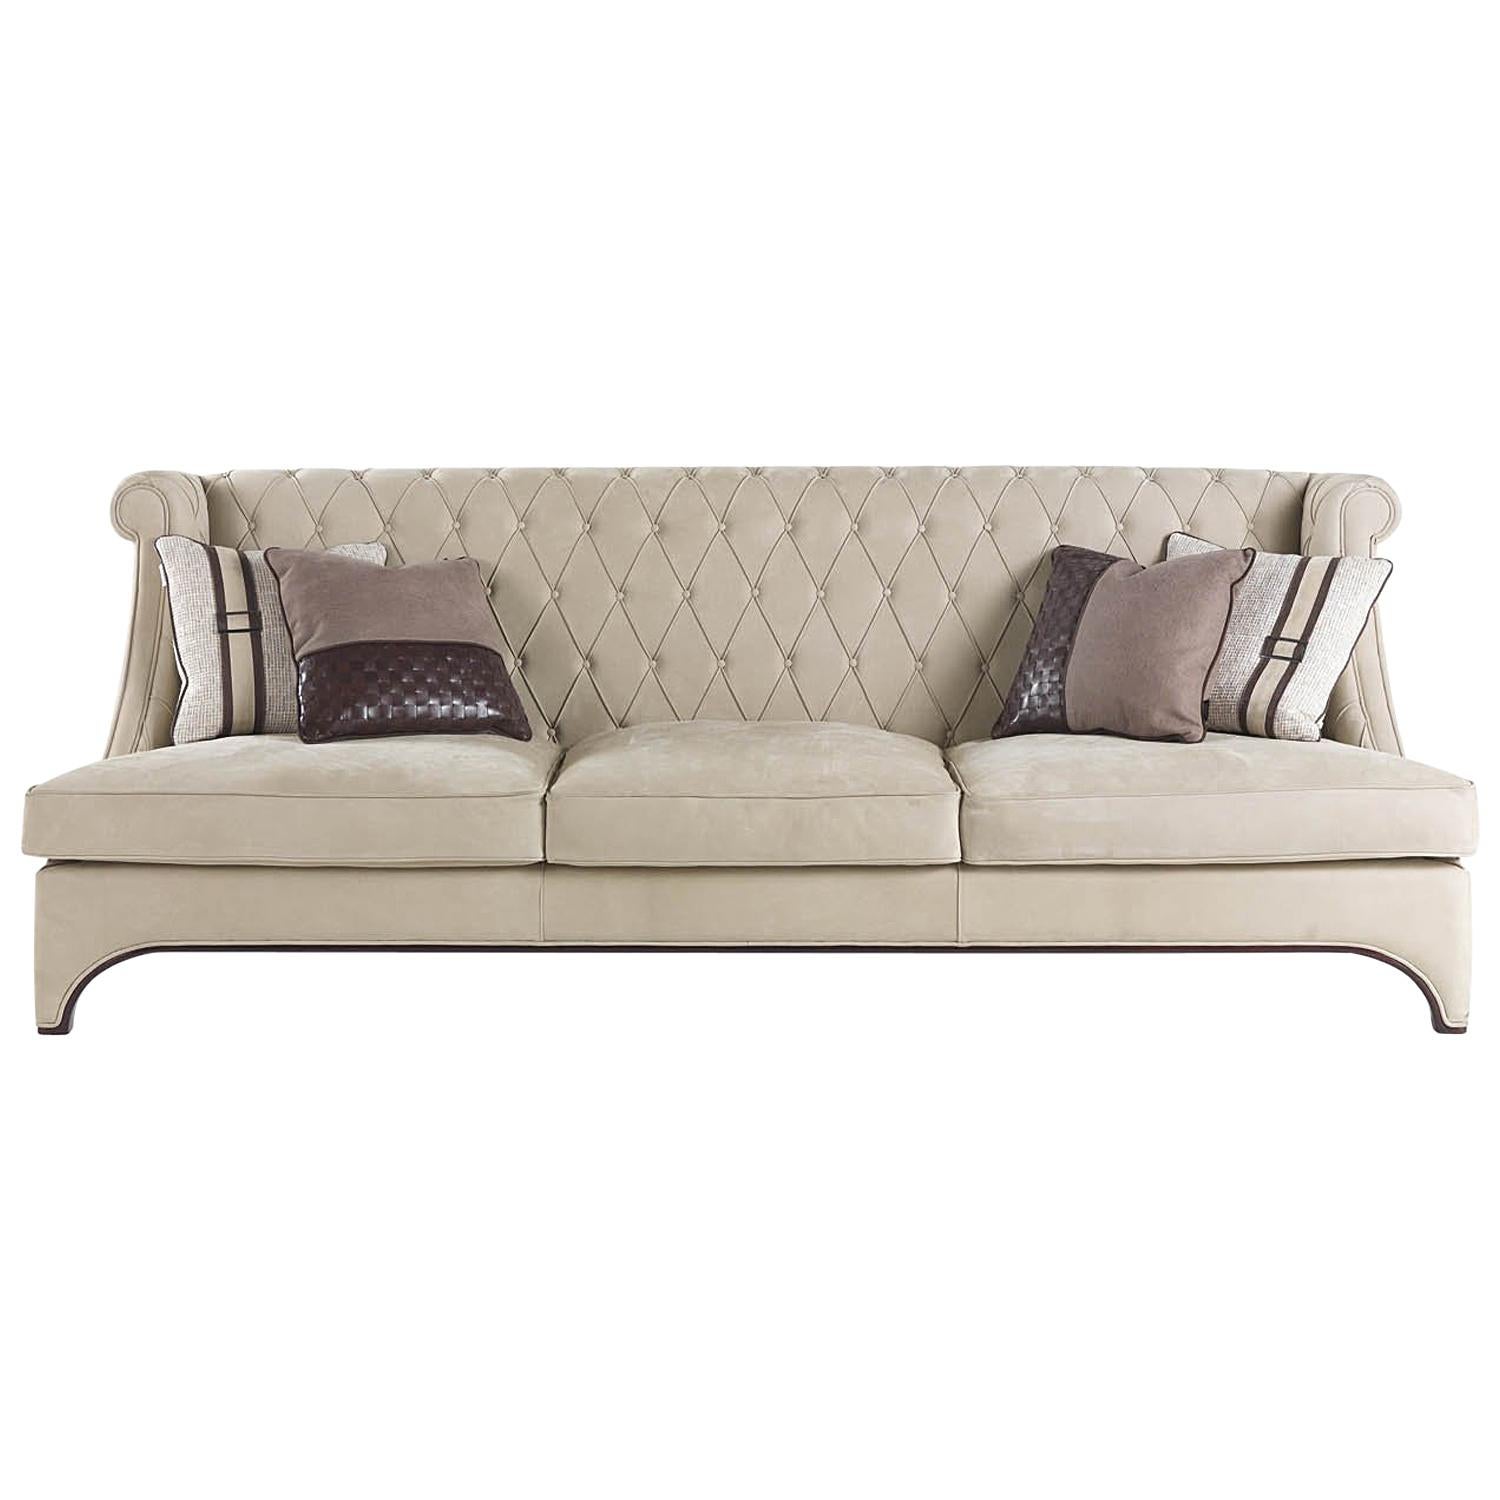 Gianfranco Ferre Bradmore Three-Seat Sofa in Cream Leather For Sale